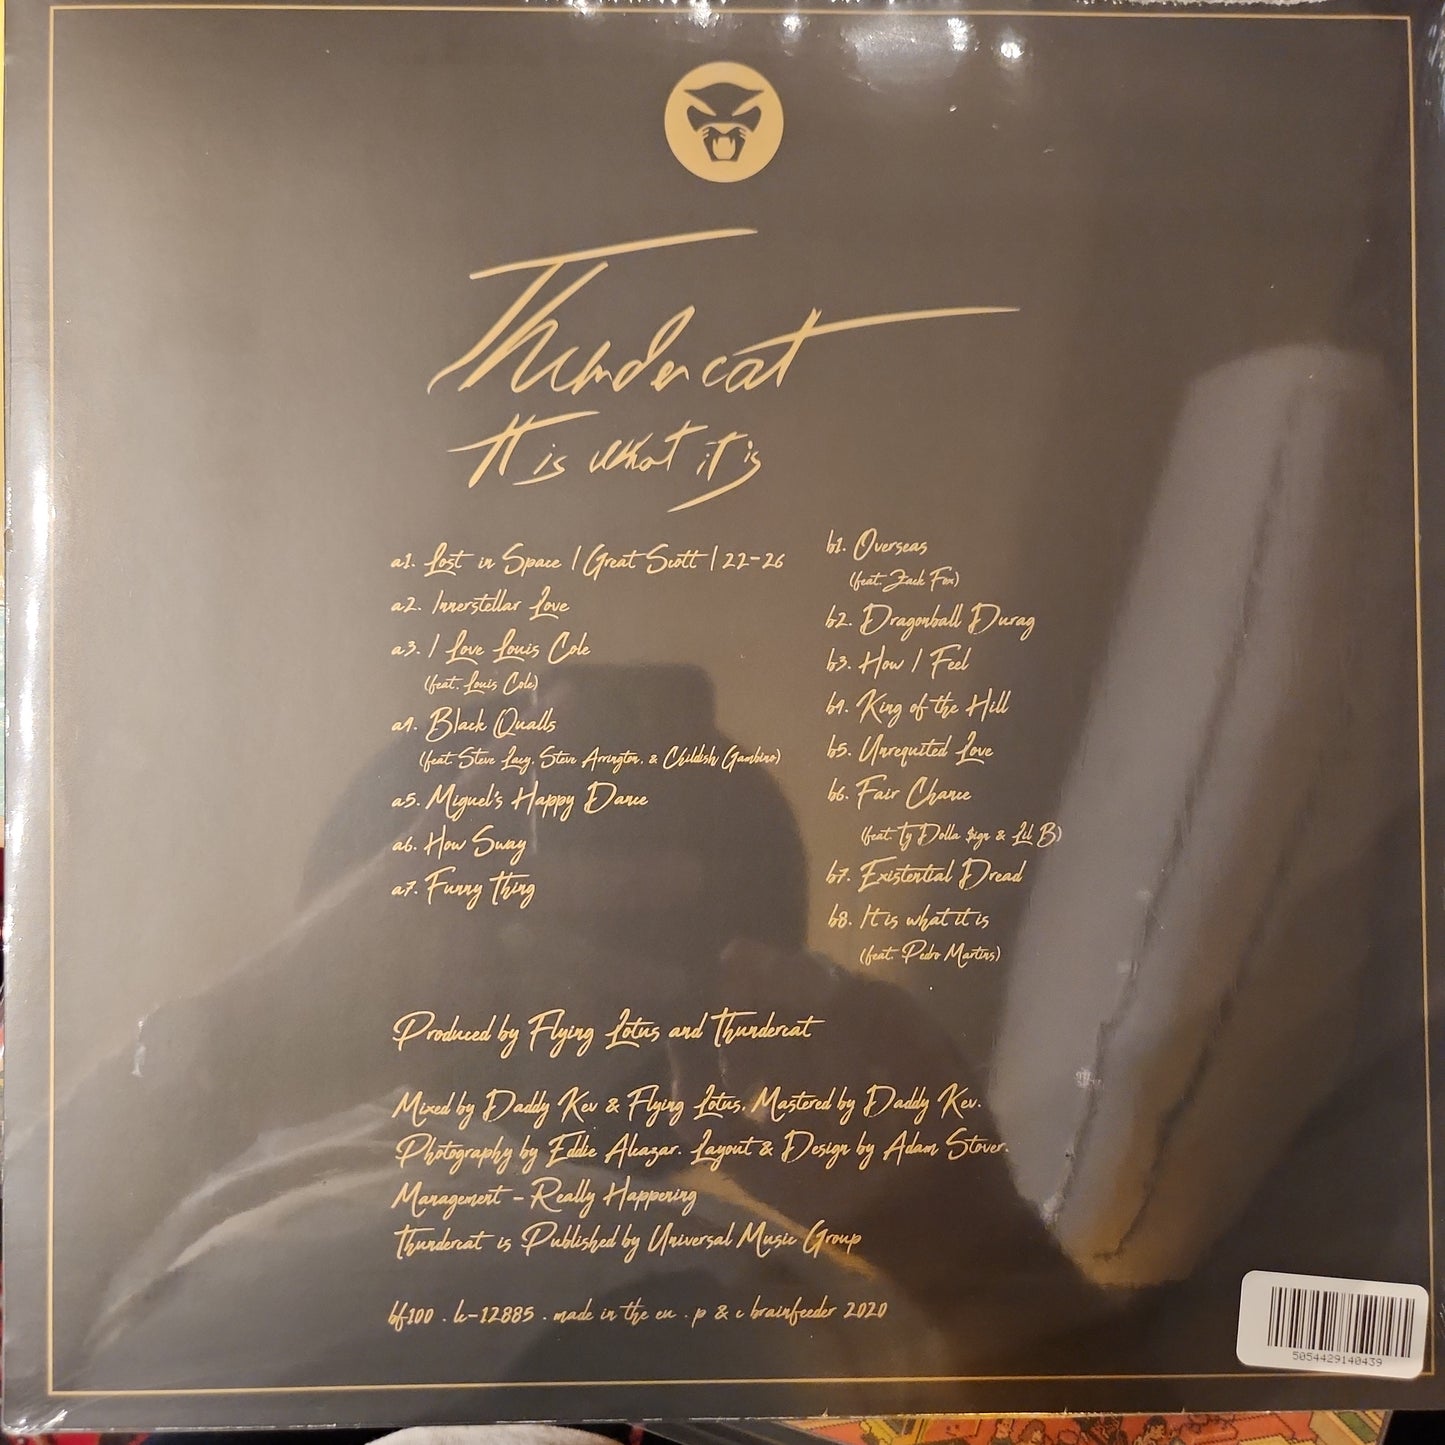 Thundercat - It is what it is - Vinyl LP